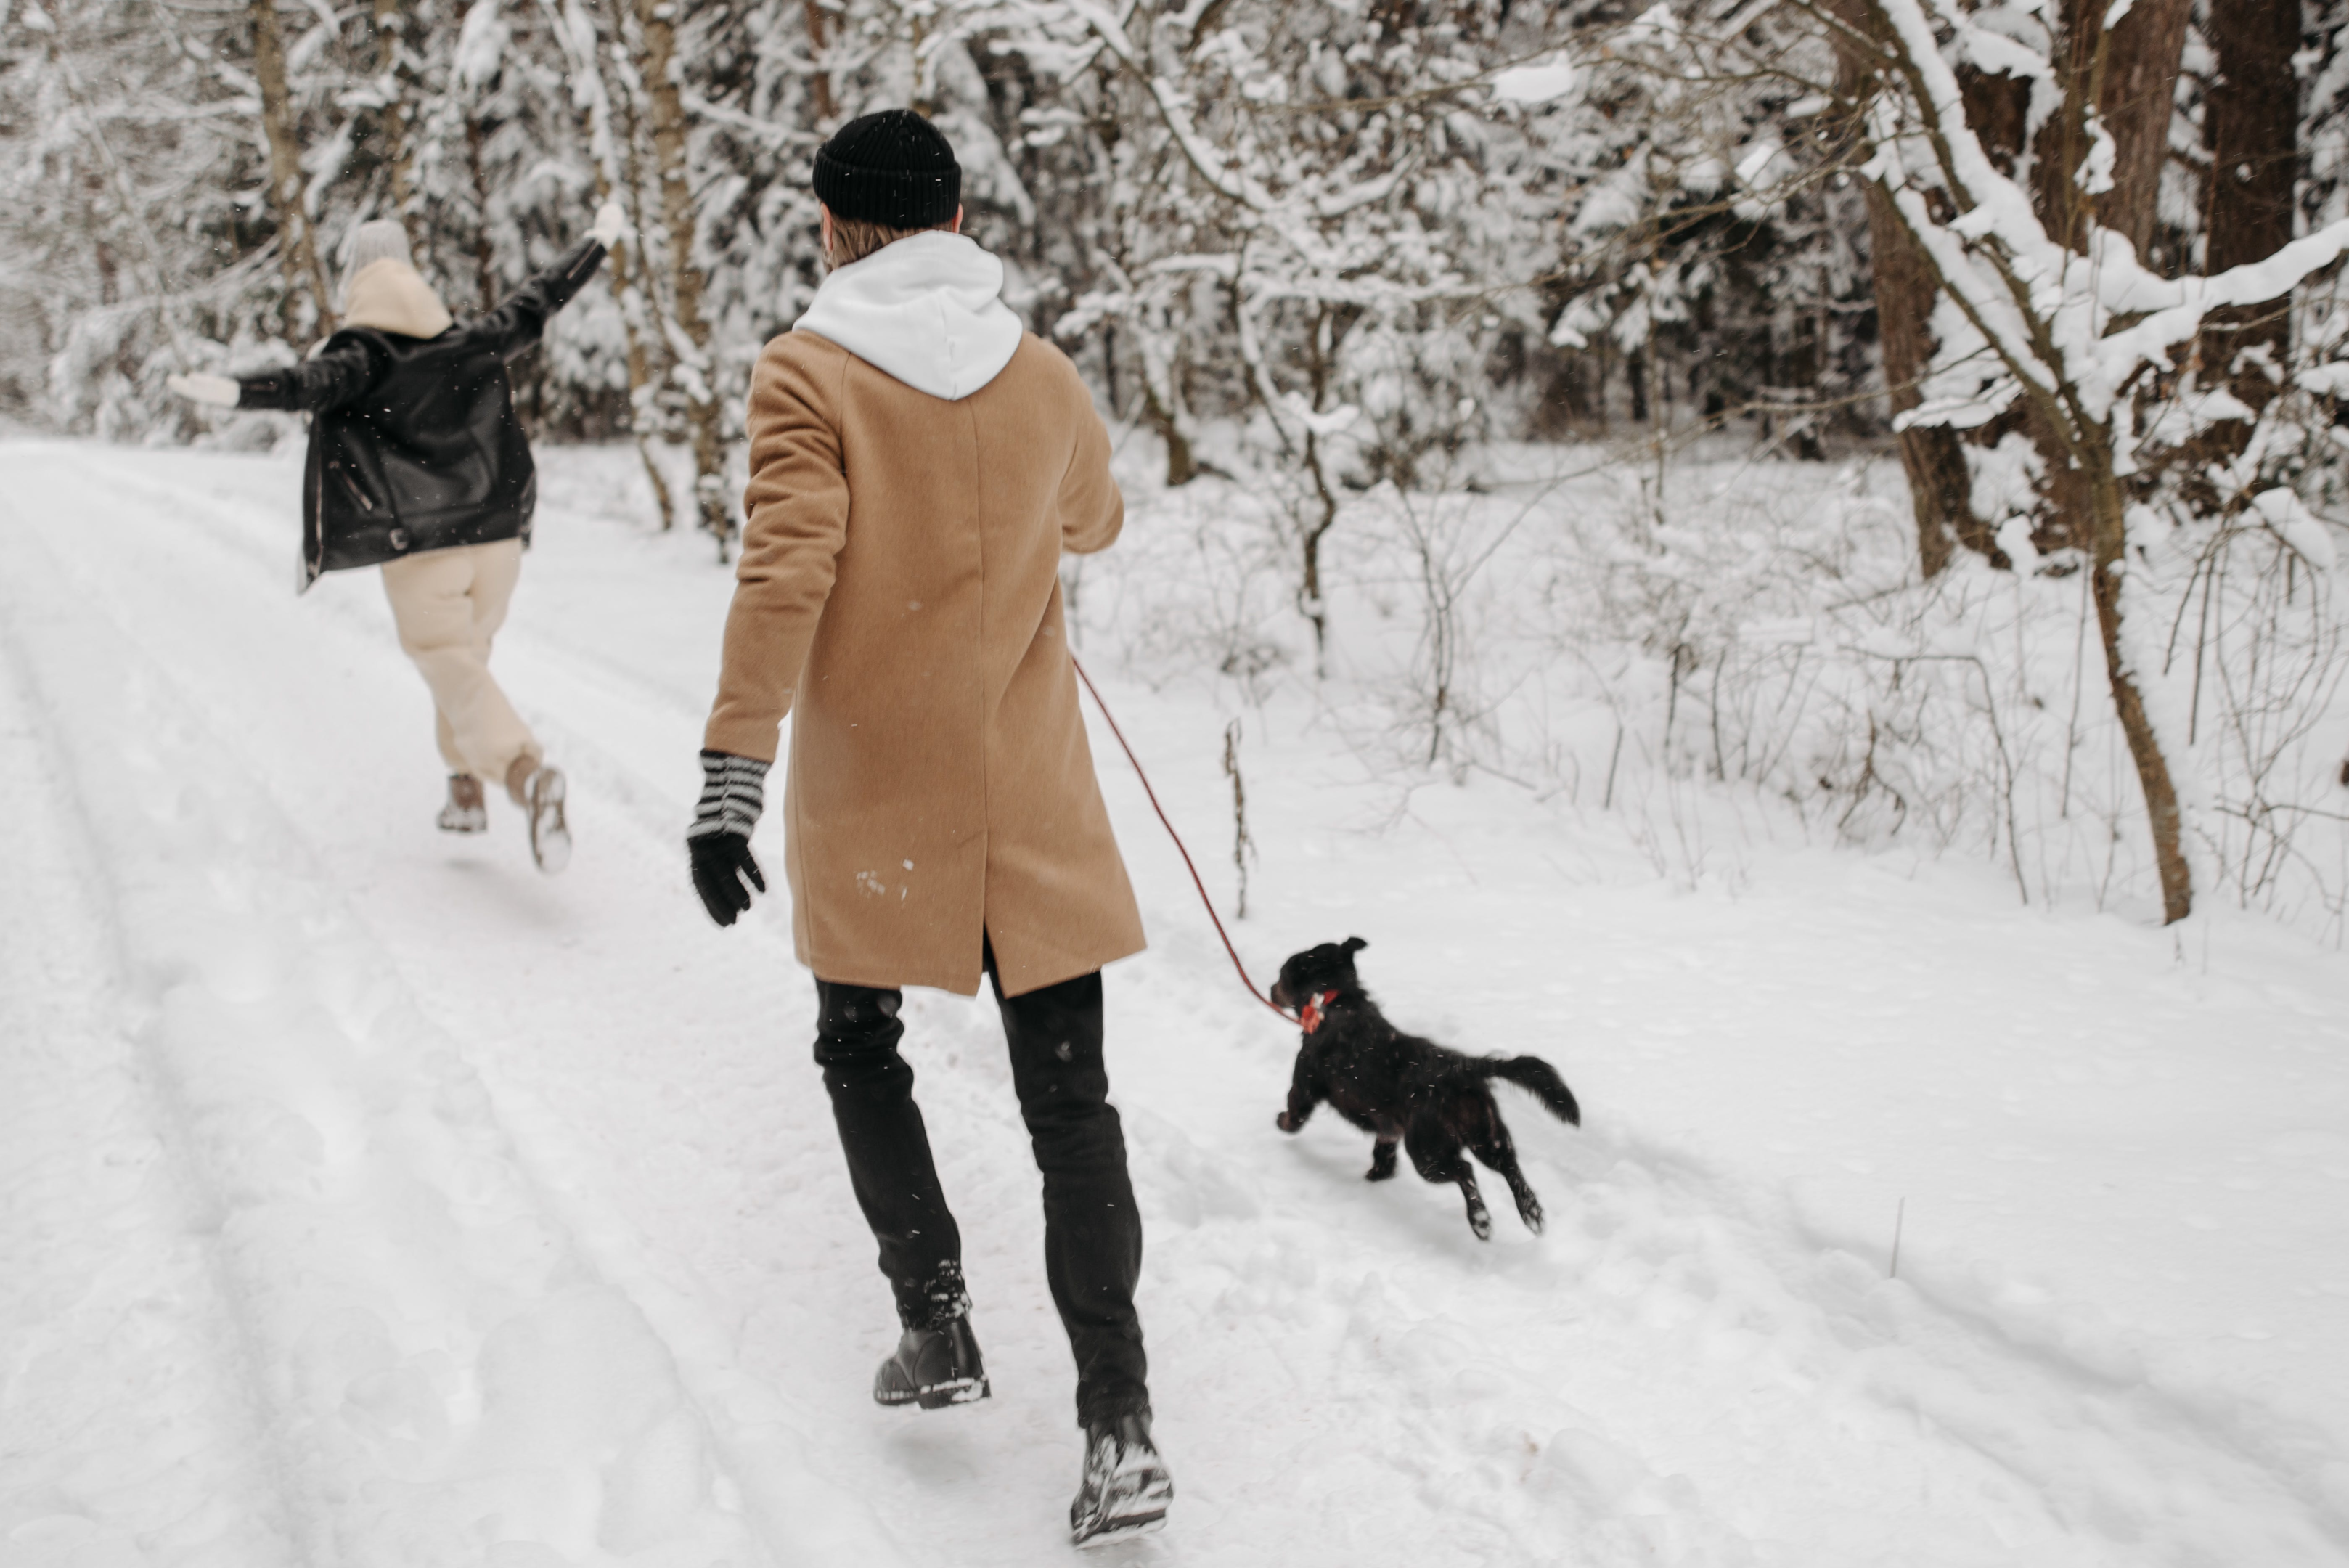 man, woman and their dog run on a snowy path 